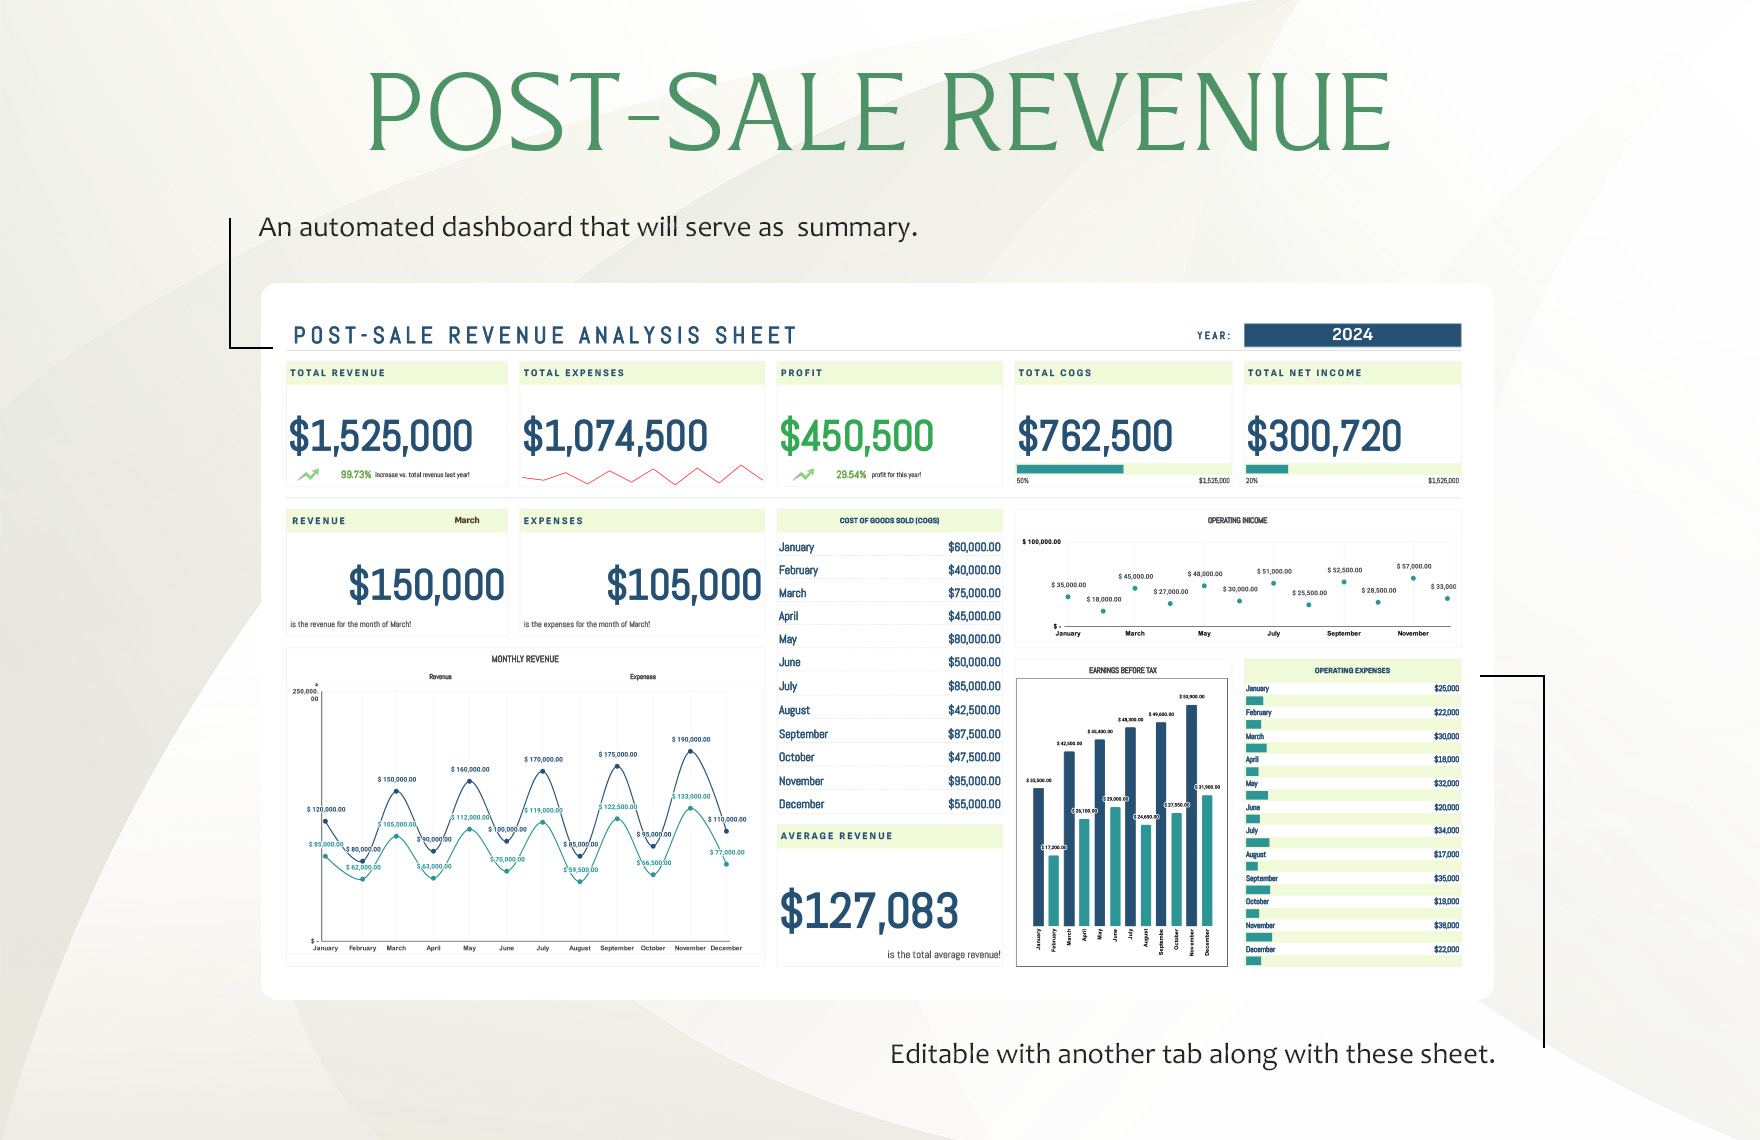 Post-Sale Revenue Analysis Sheet Template